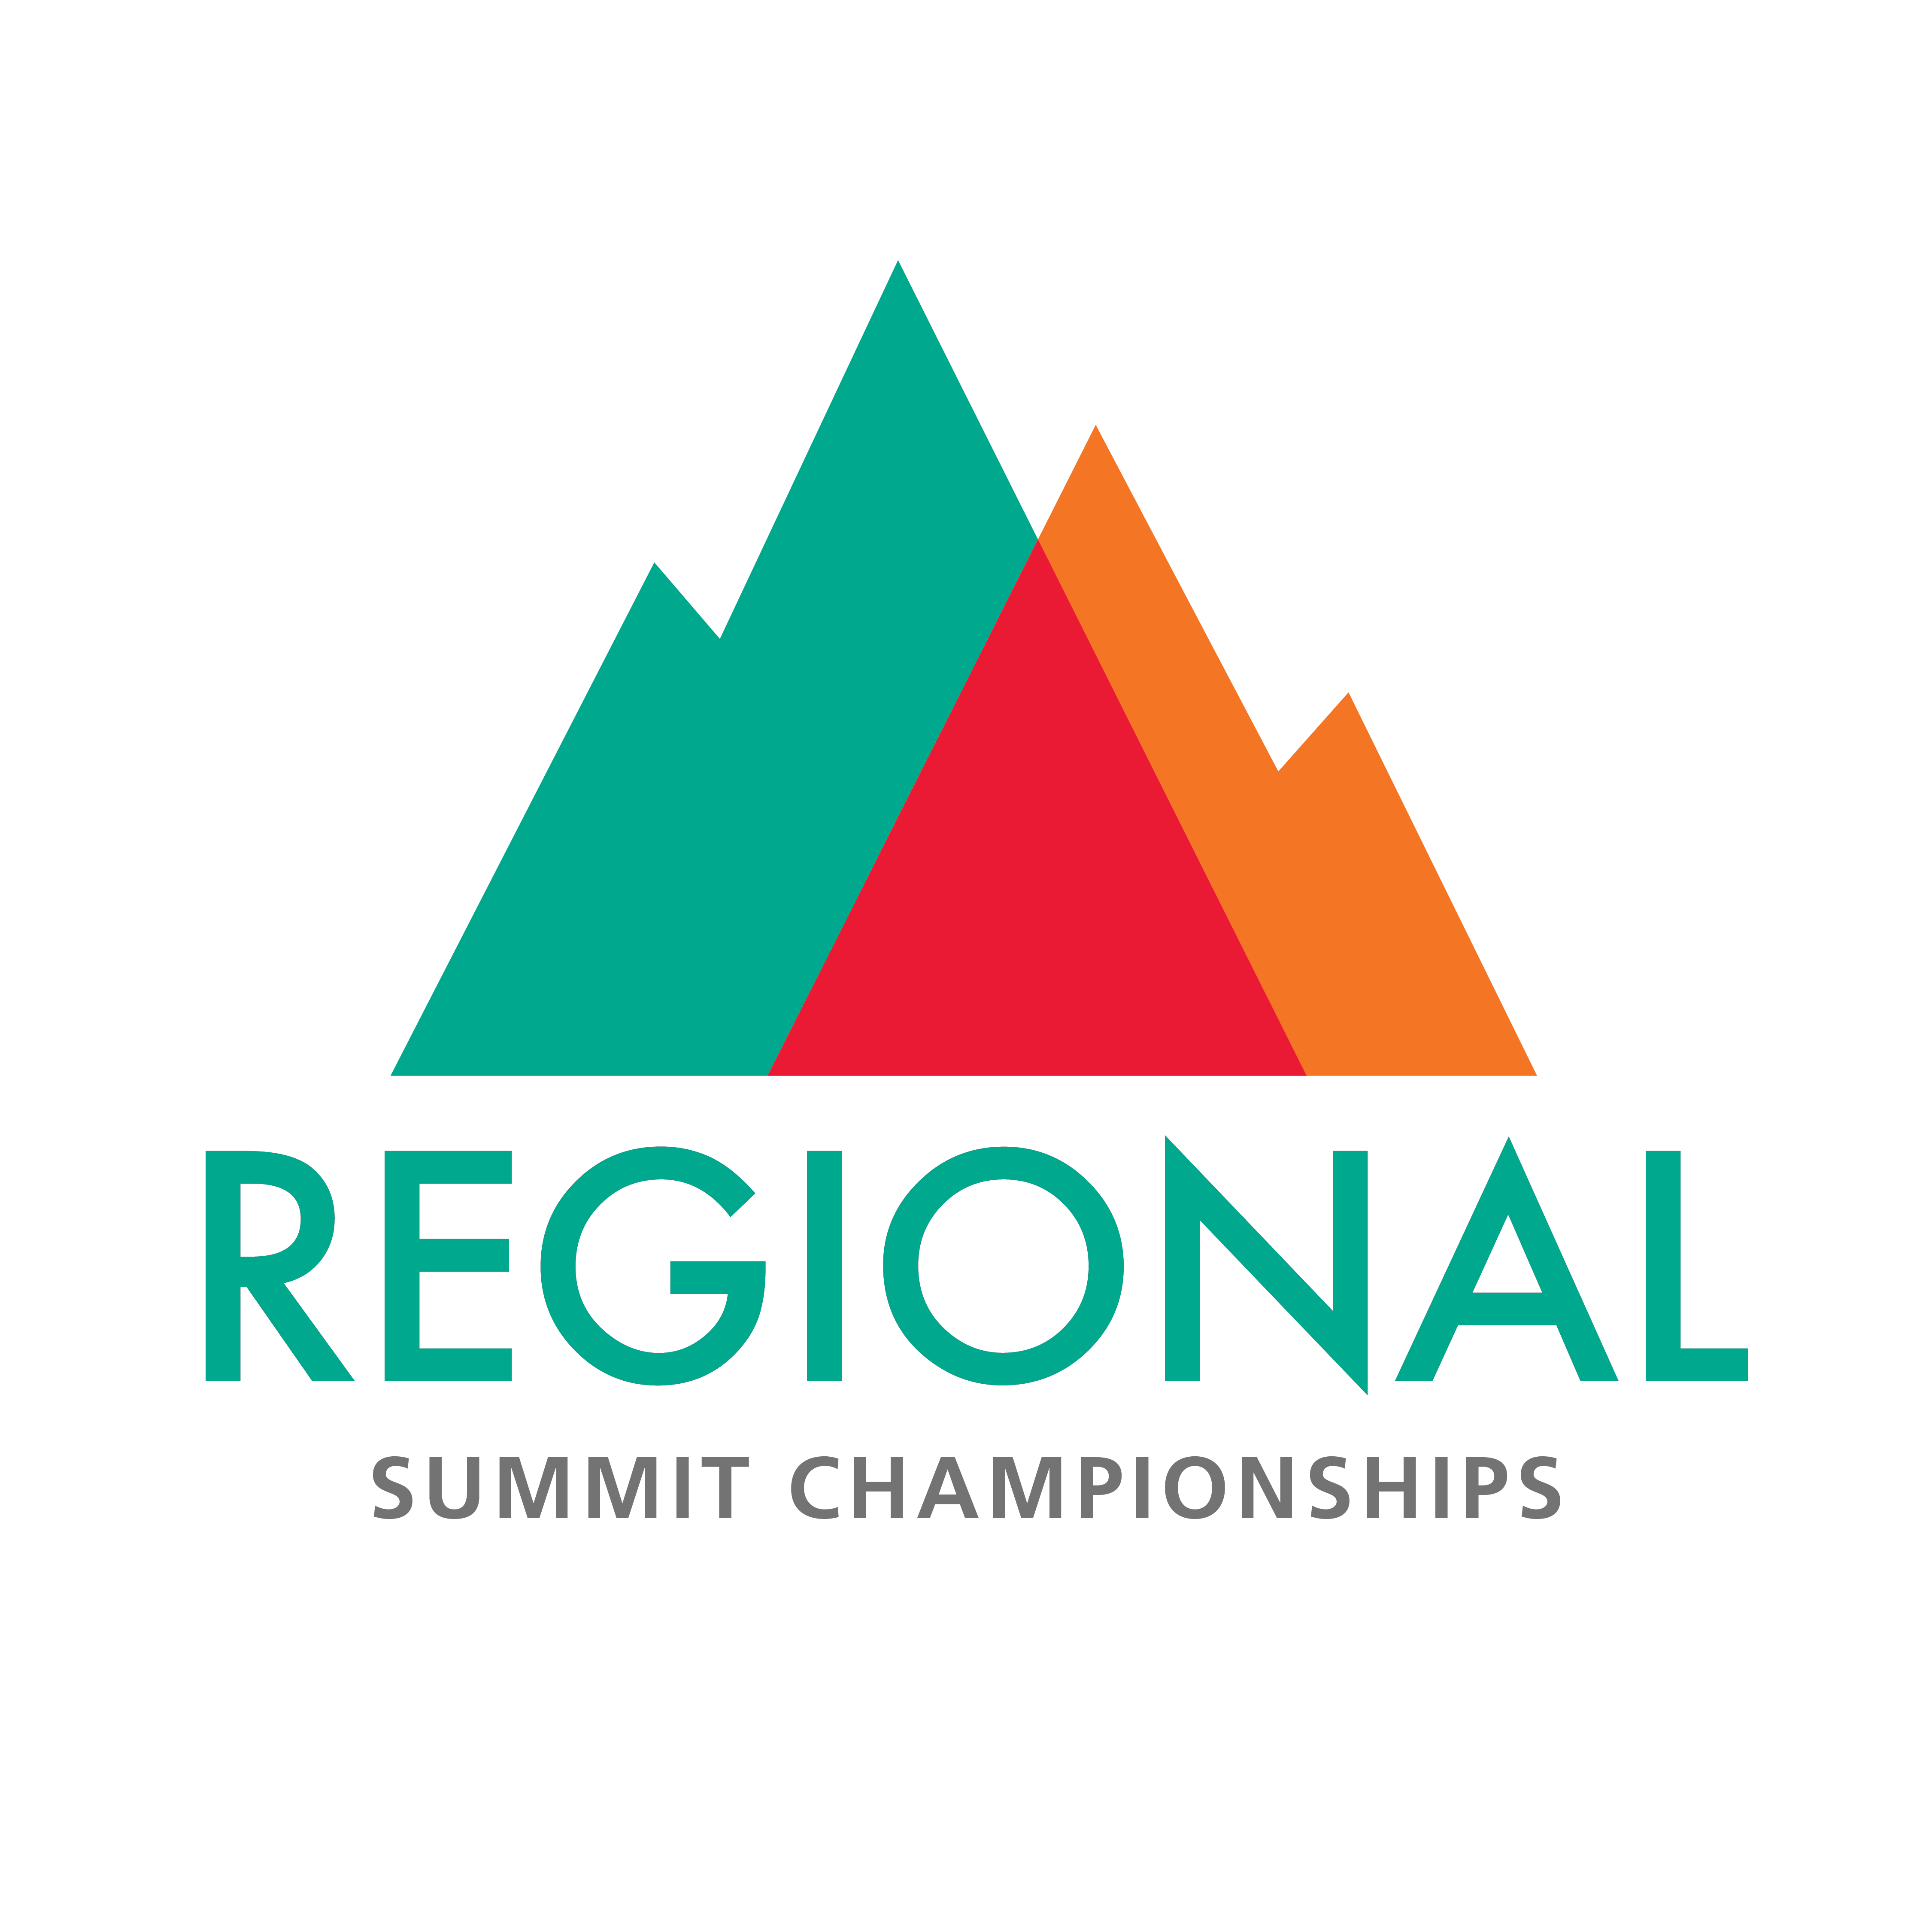 The Regional Summit